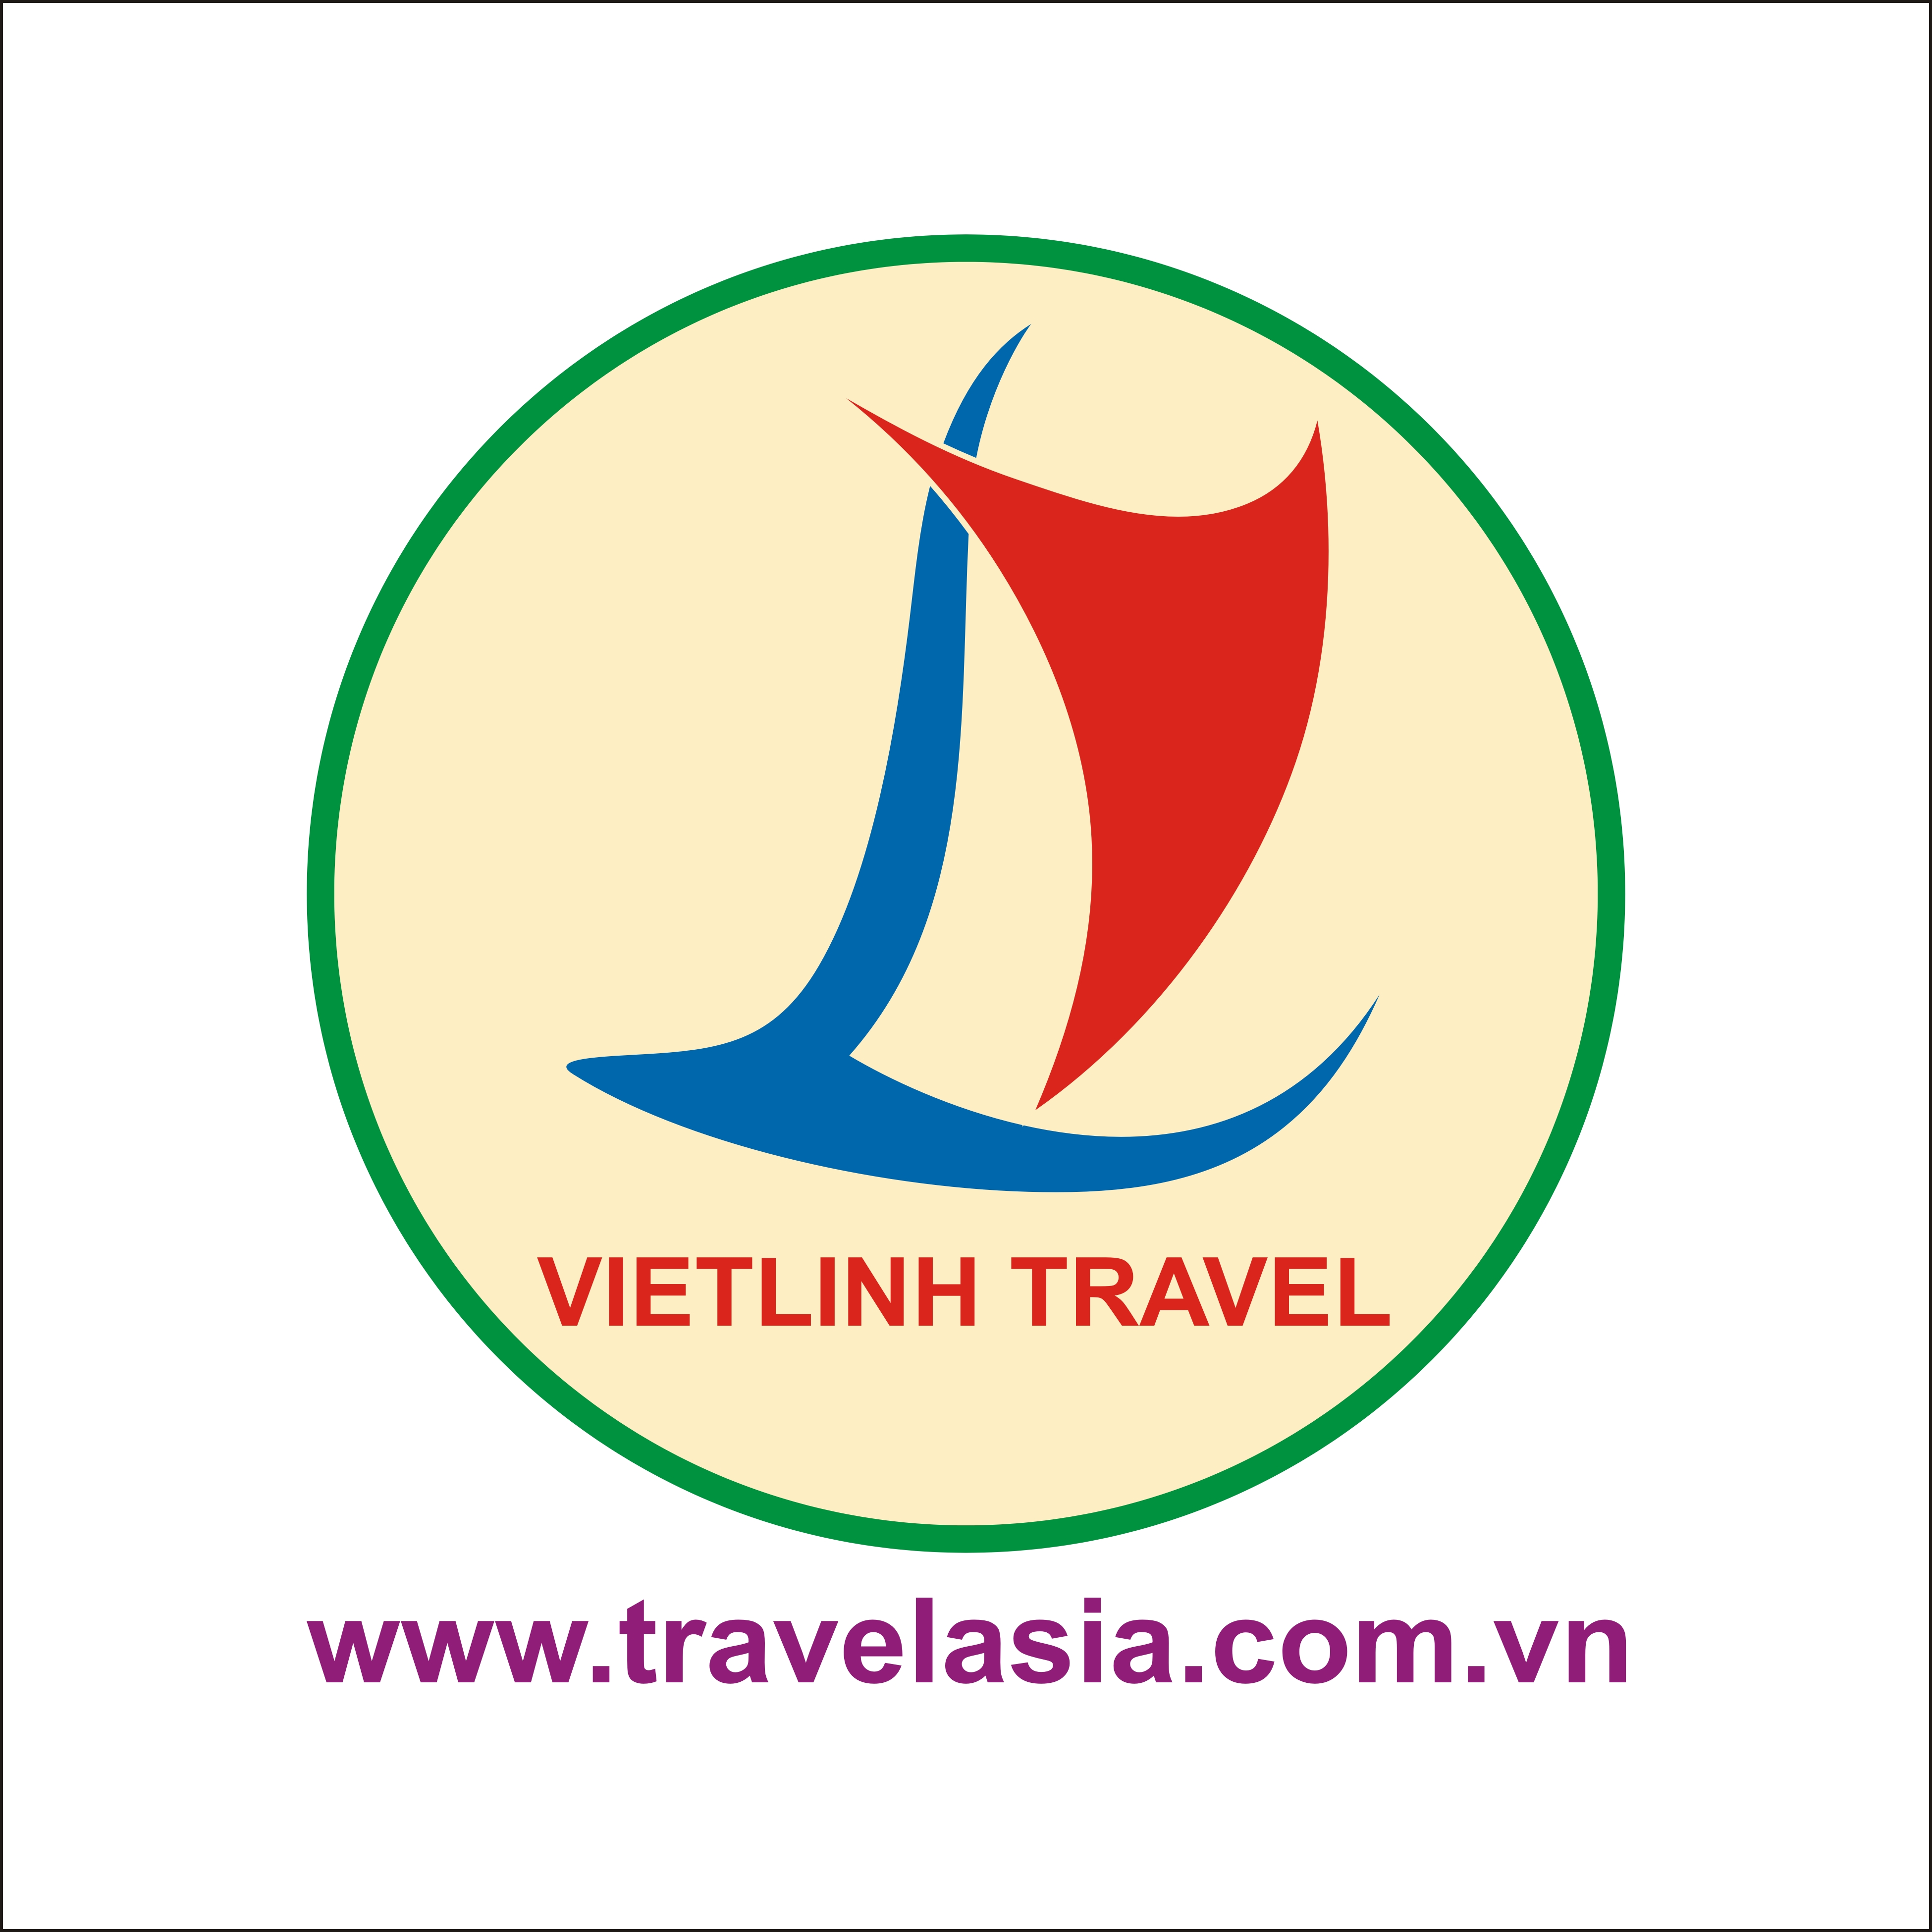 Viet Linh Travel Co.,Ltd